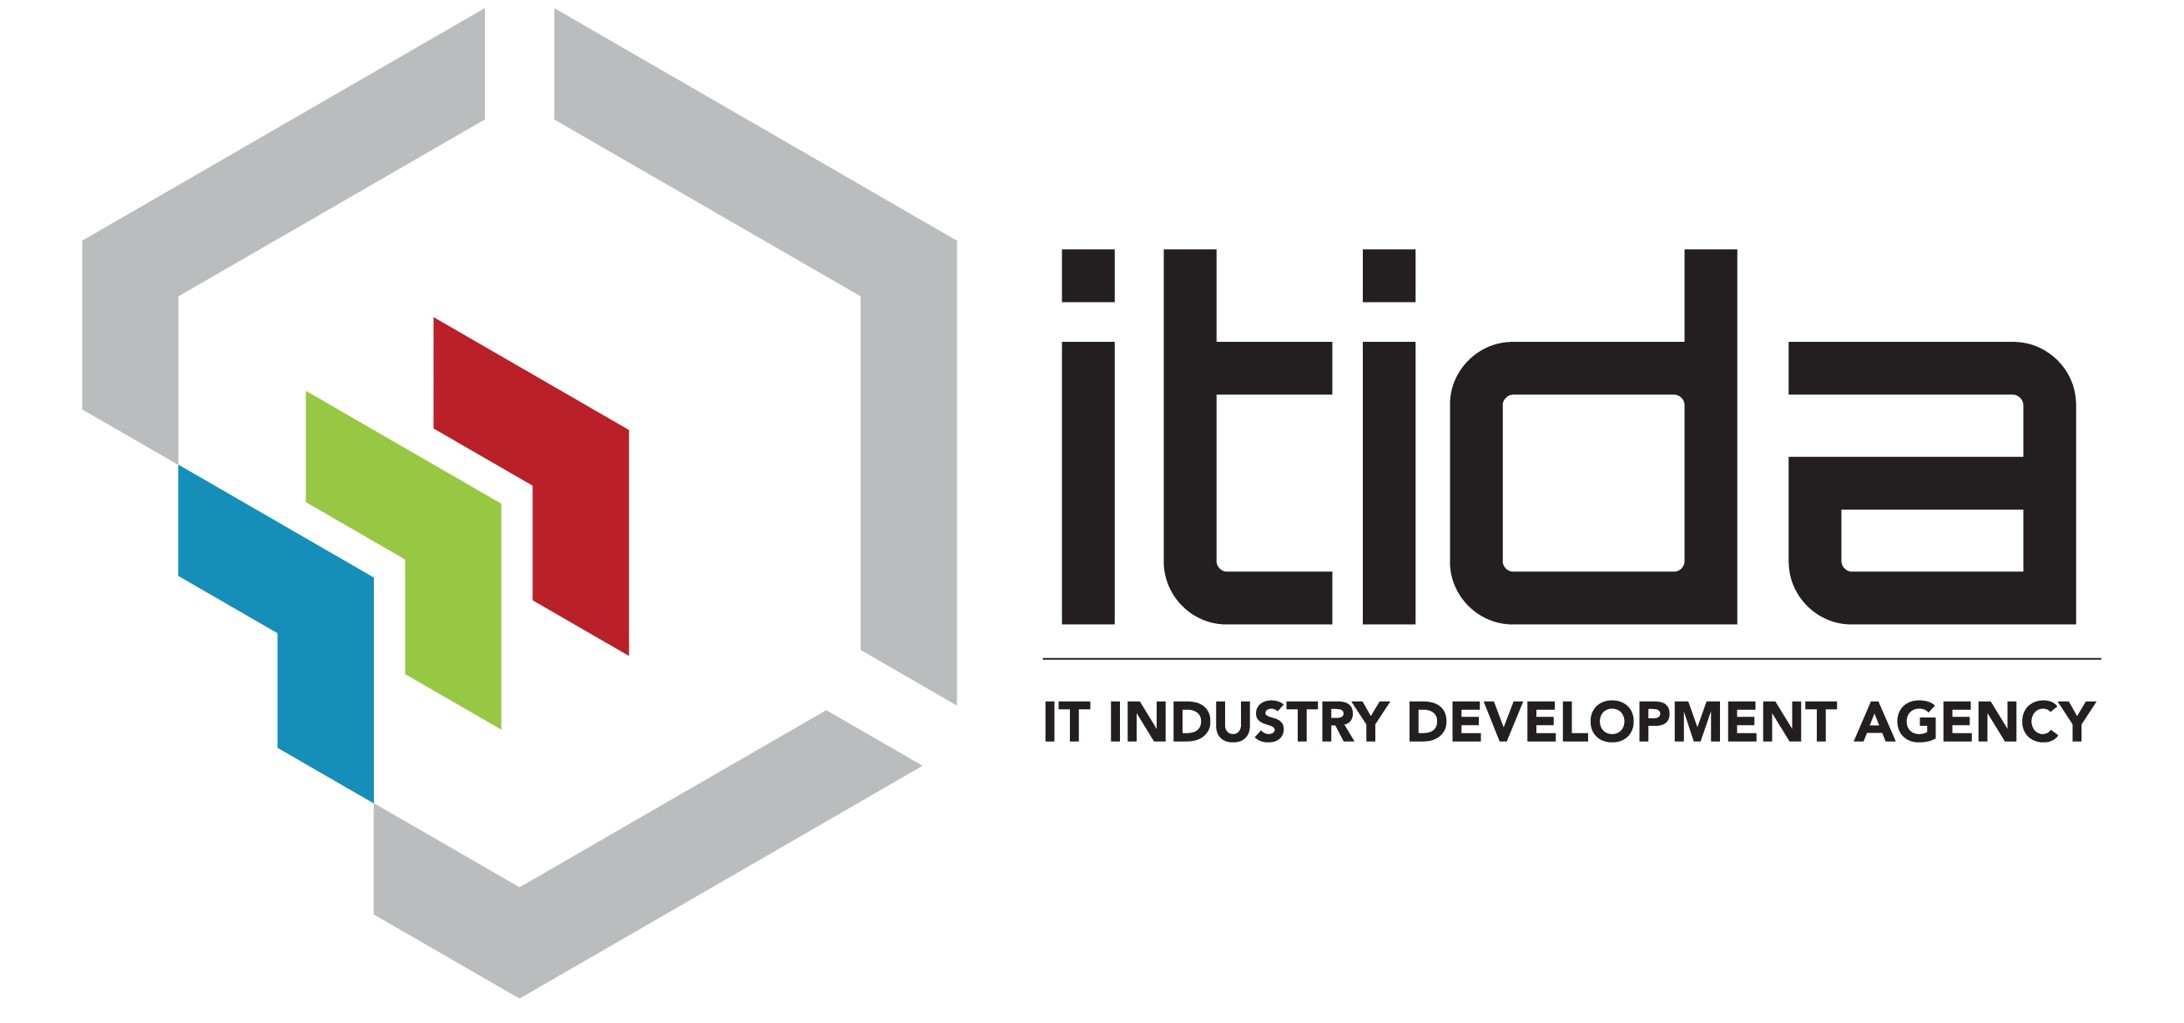 Information Technology Industry Development Agency (ITIDA